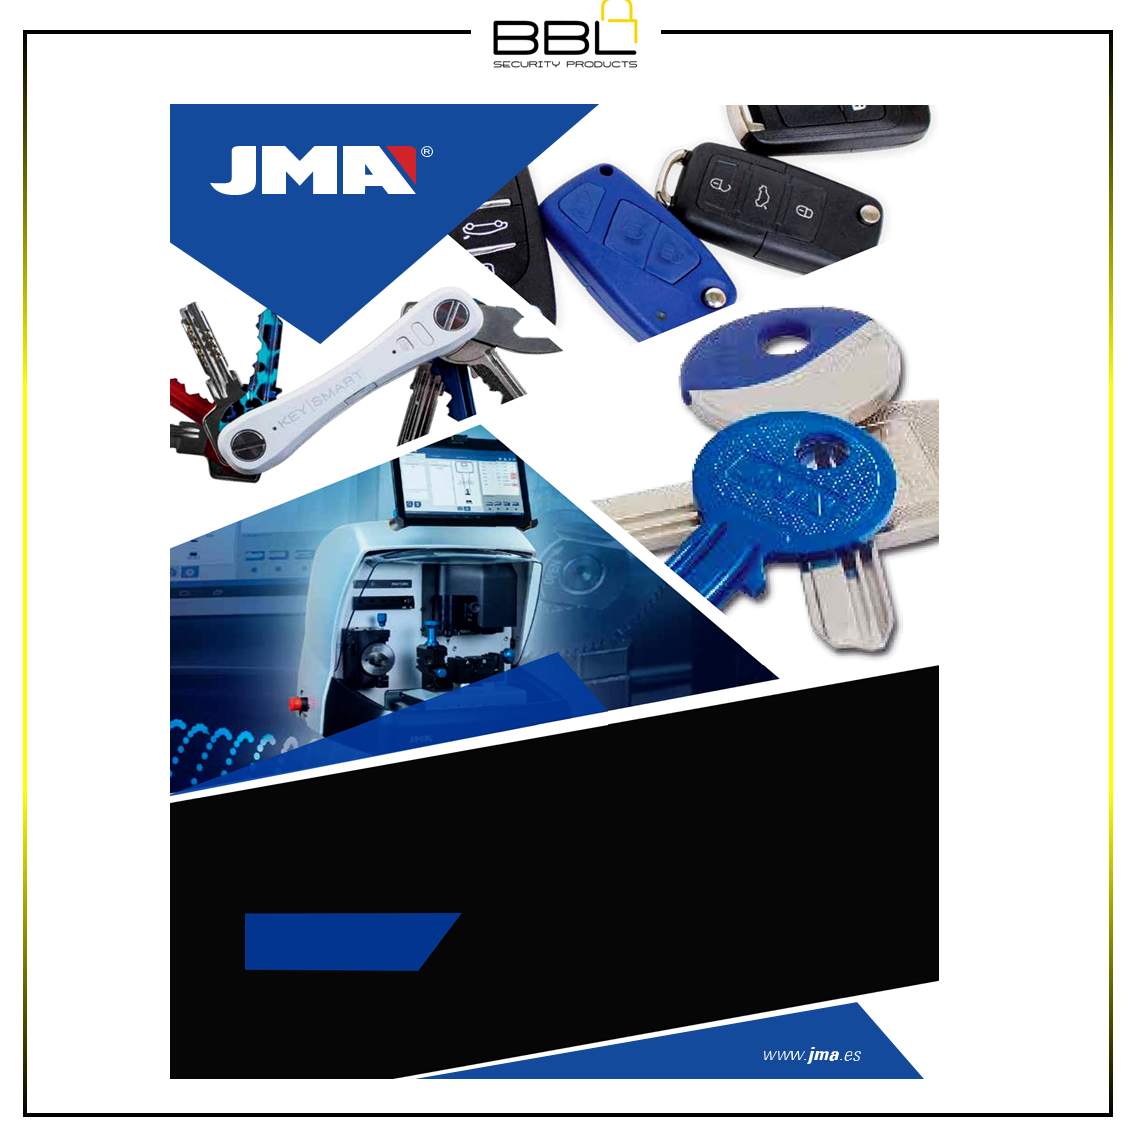 BBL - JMA Catalogue Catalogue